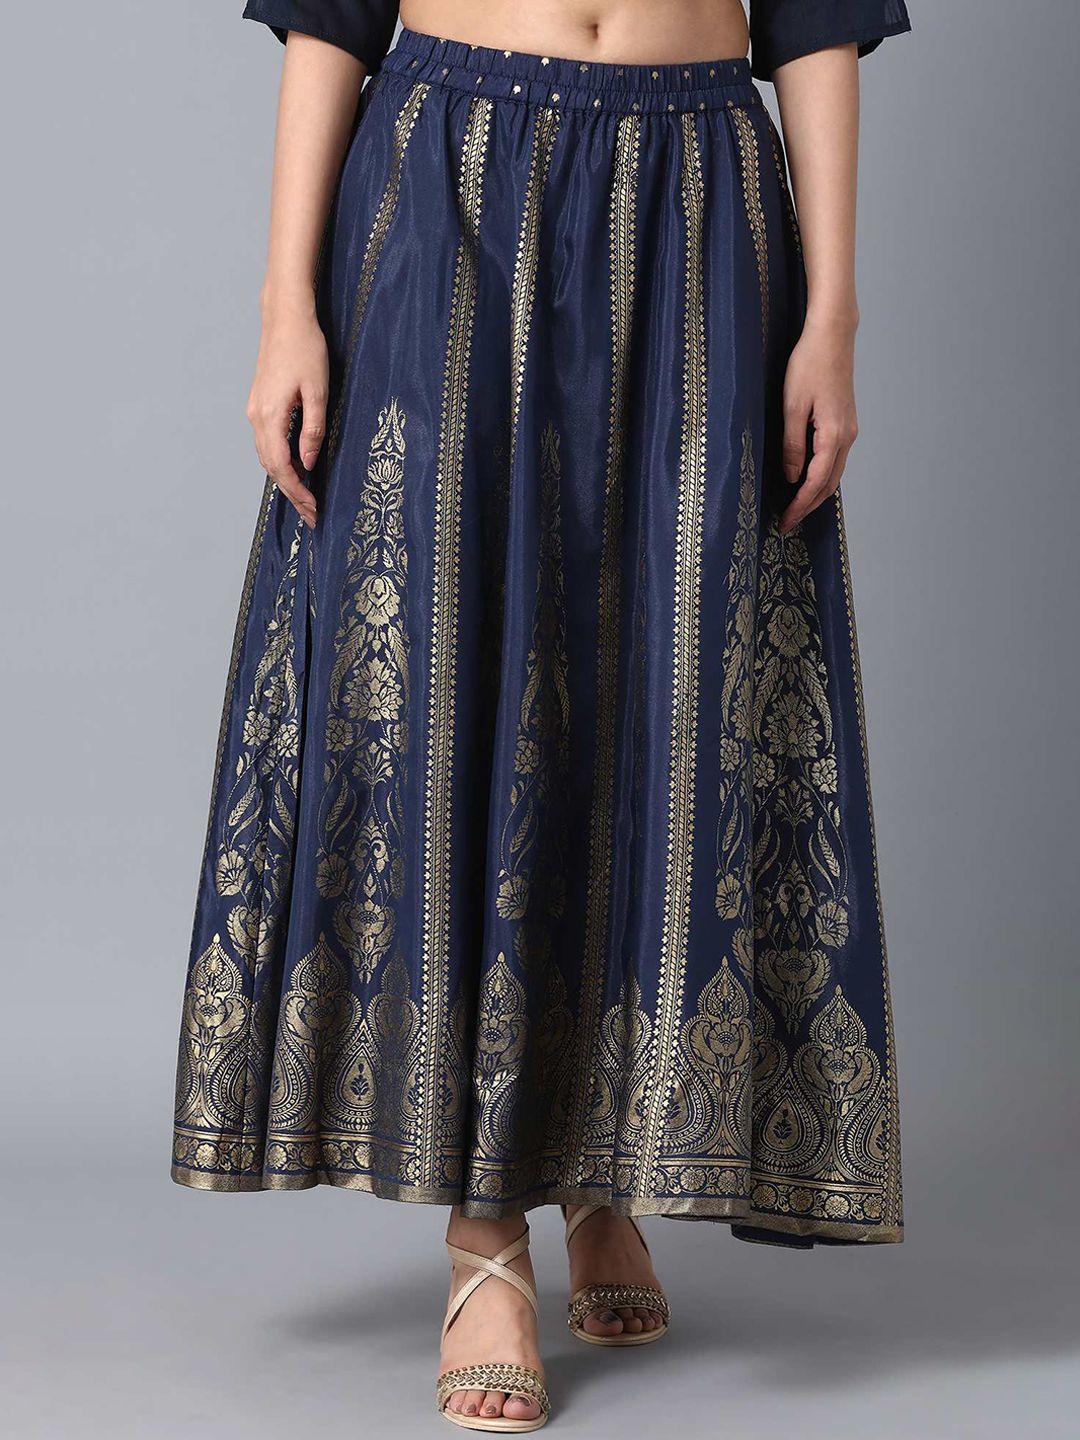 elleven women navy blue printed flared maxi skirt